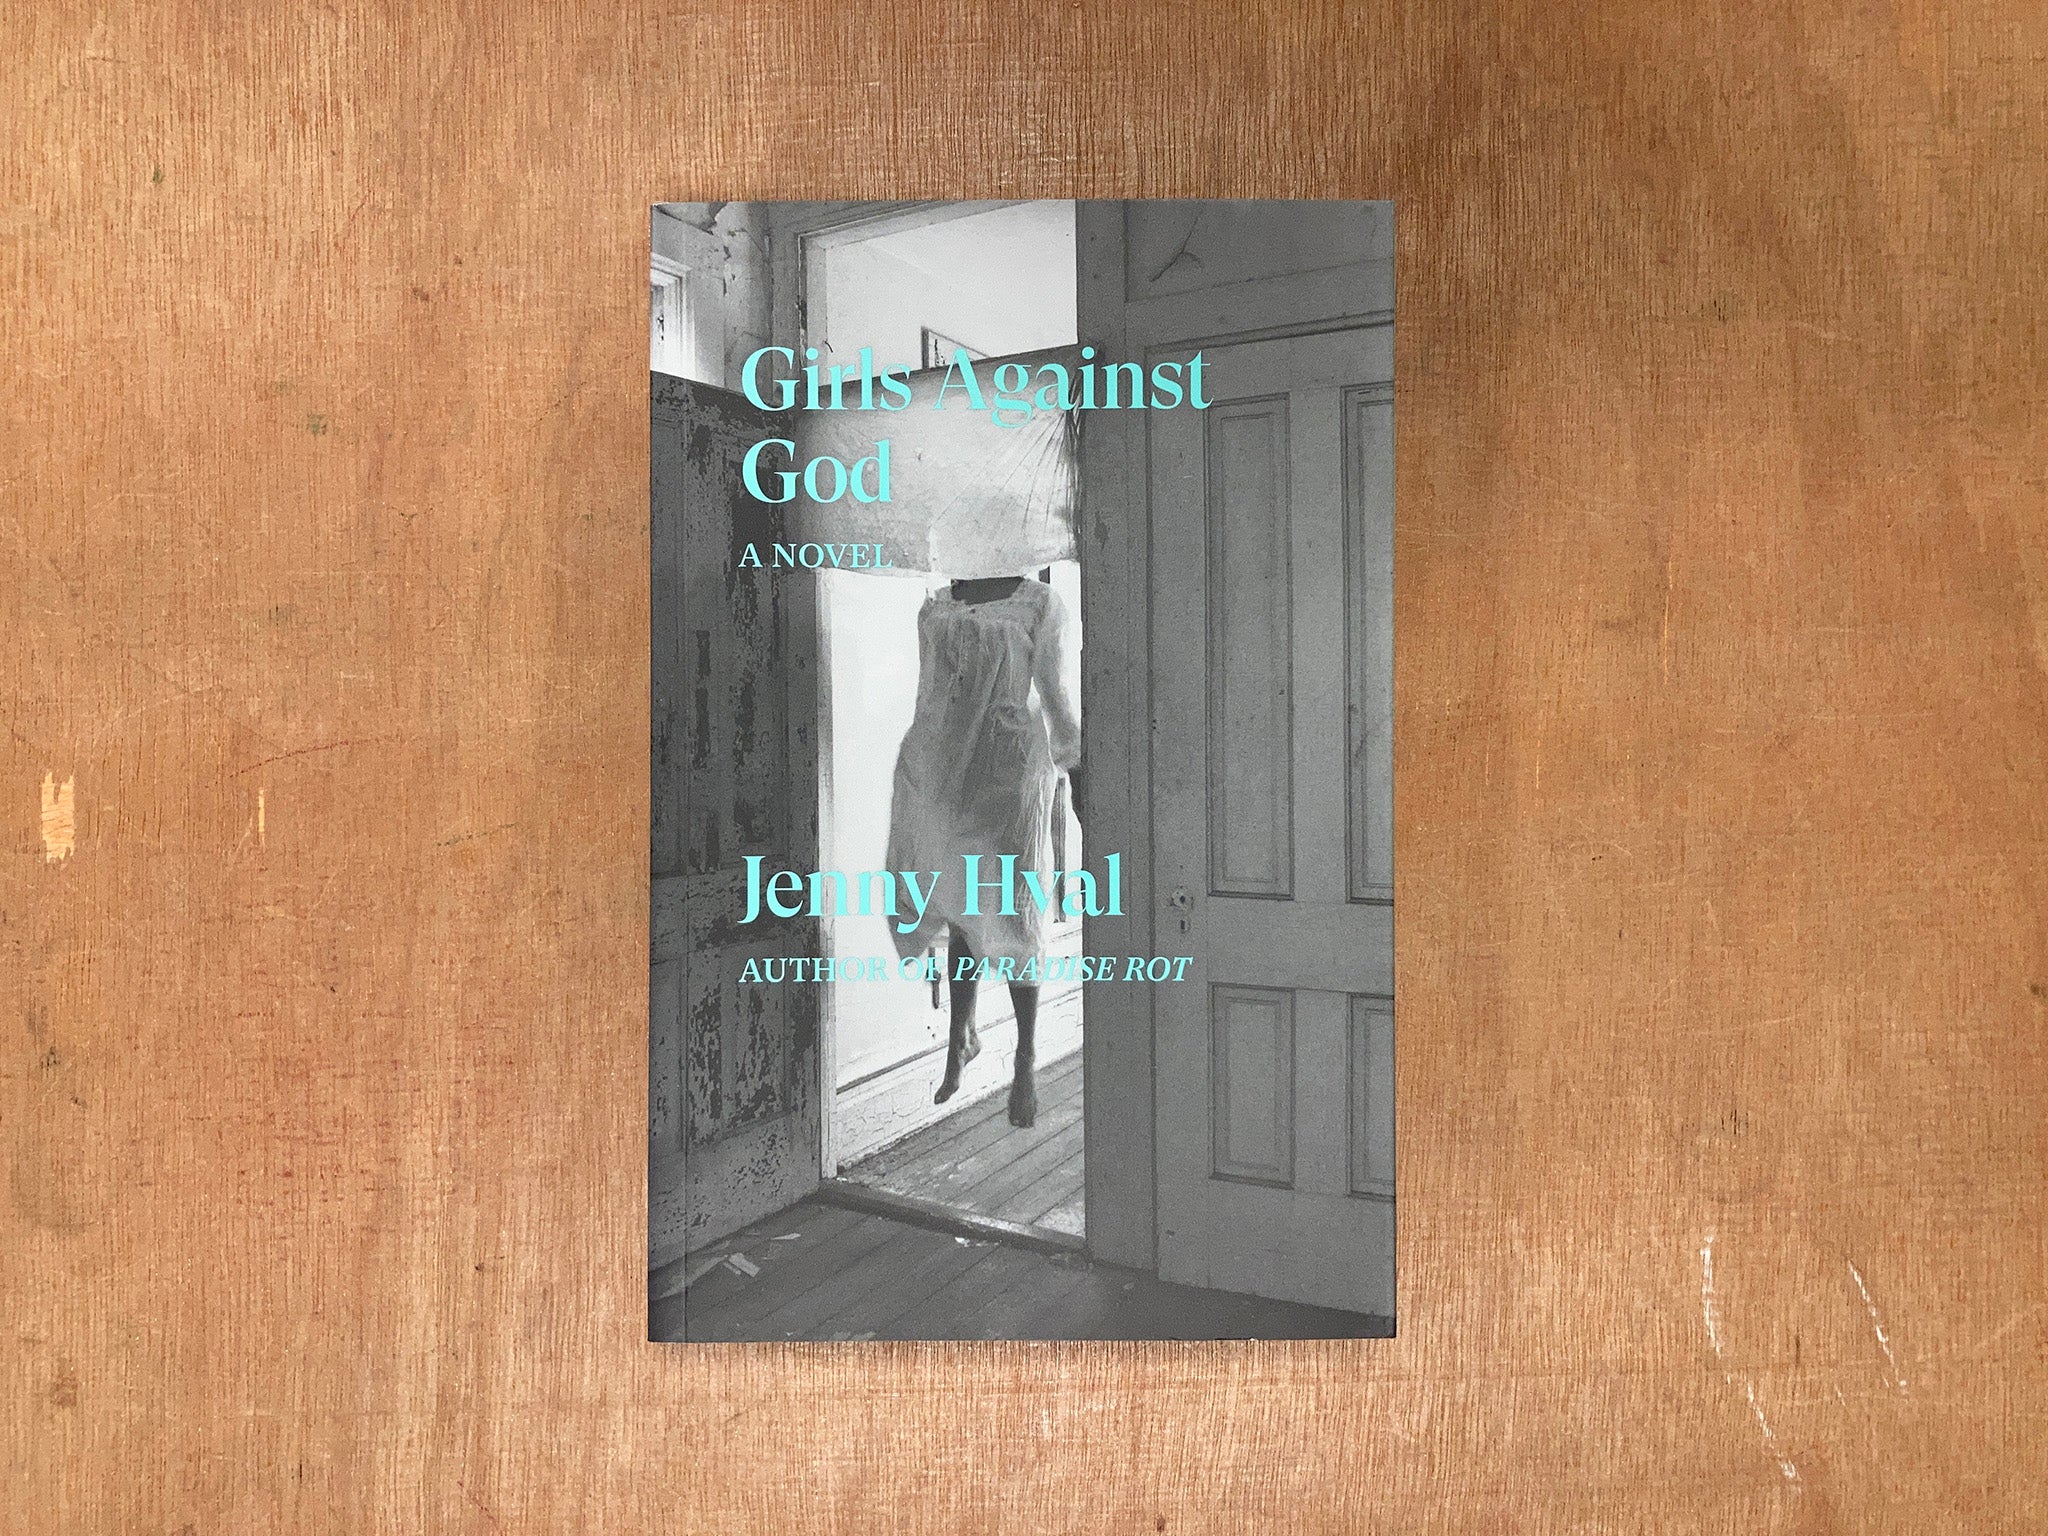 GIRLS AGAINST GOD by Jenny Hval